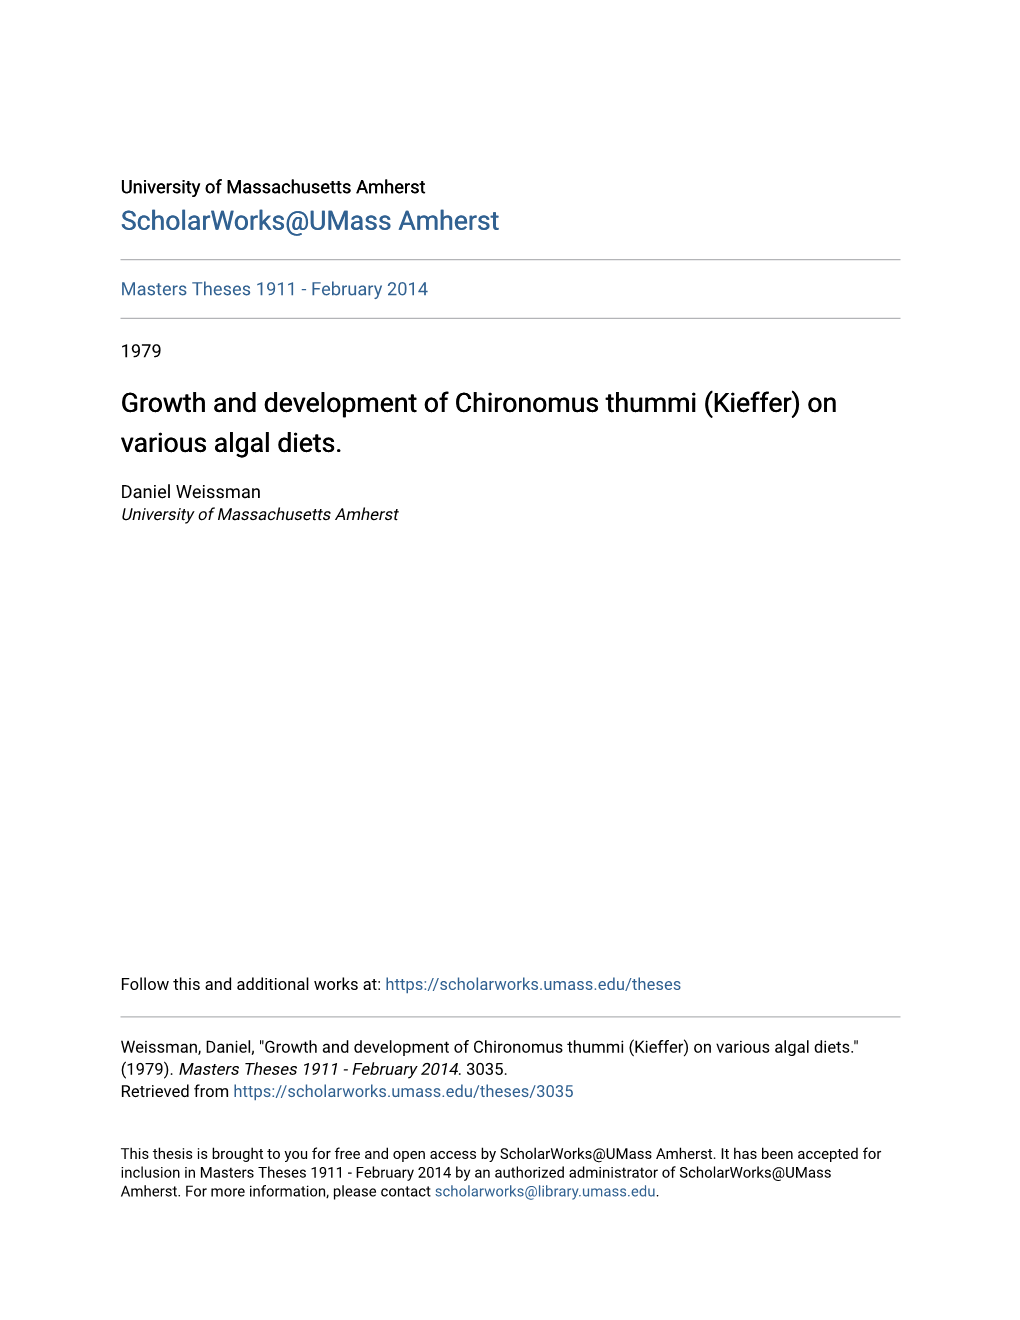 Growth and Development of Chironomus Thummi (Kieffer) on Various Algal Diets